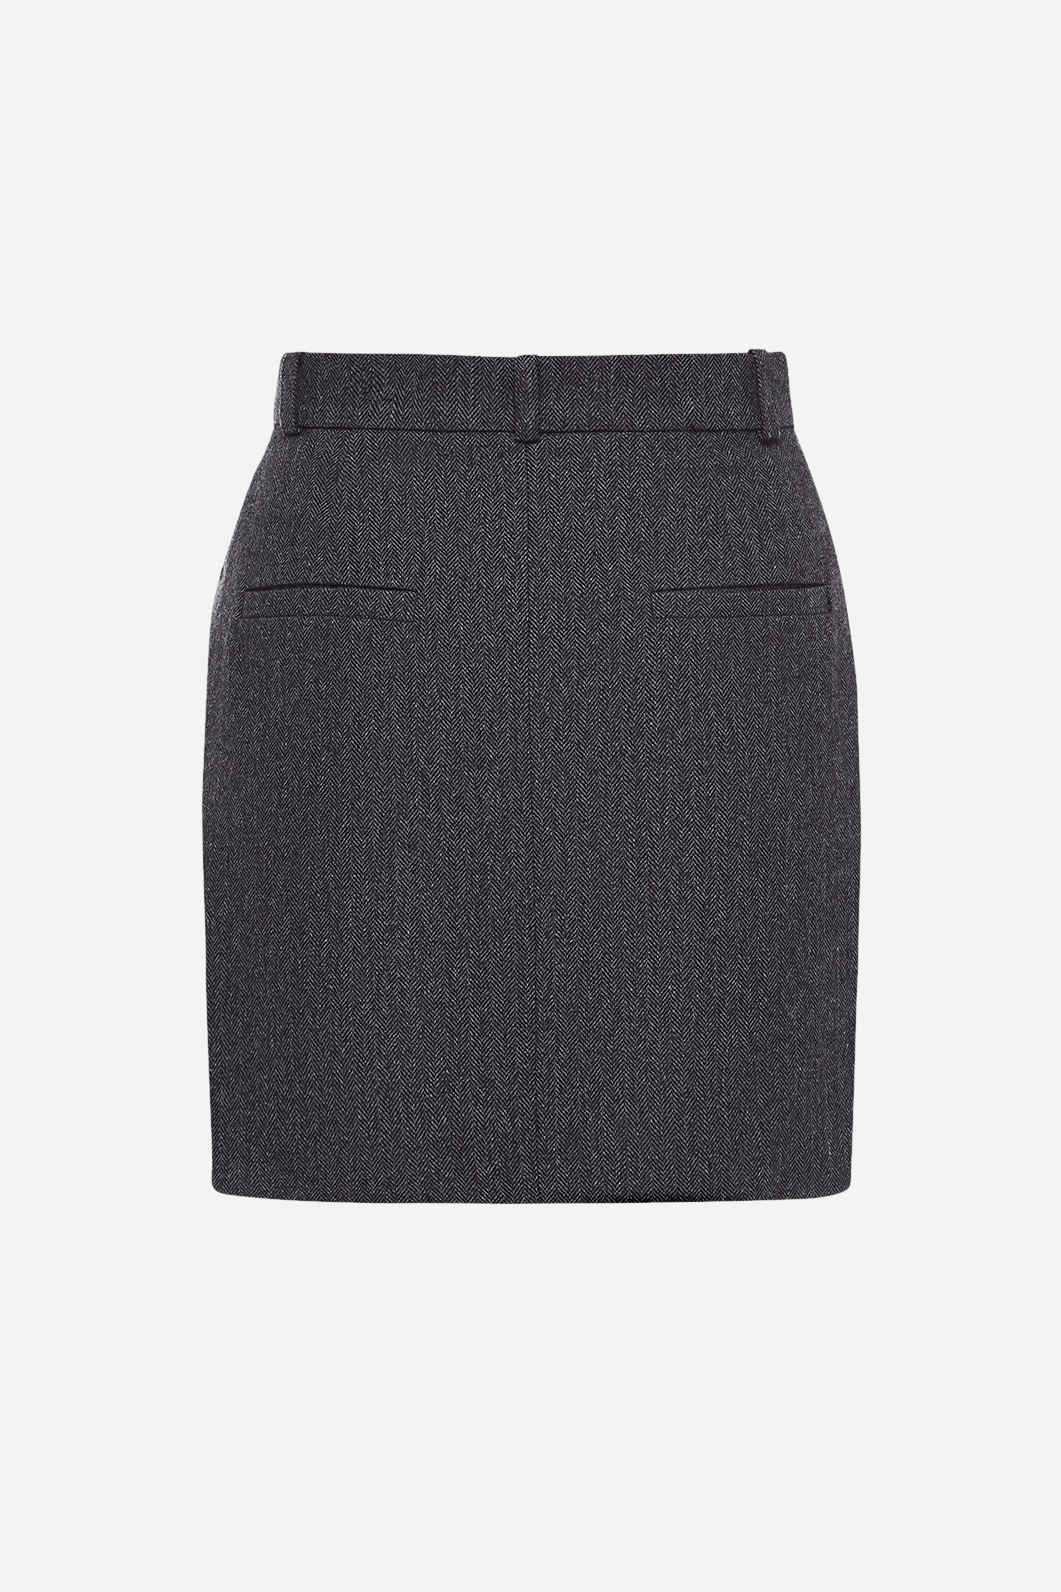 Classic gray mini skirt